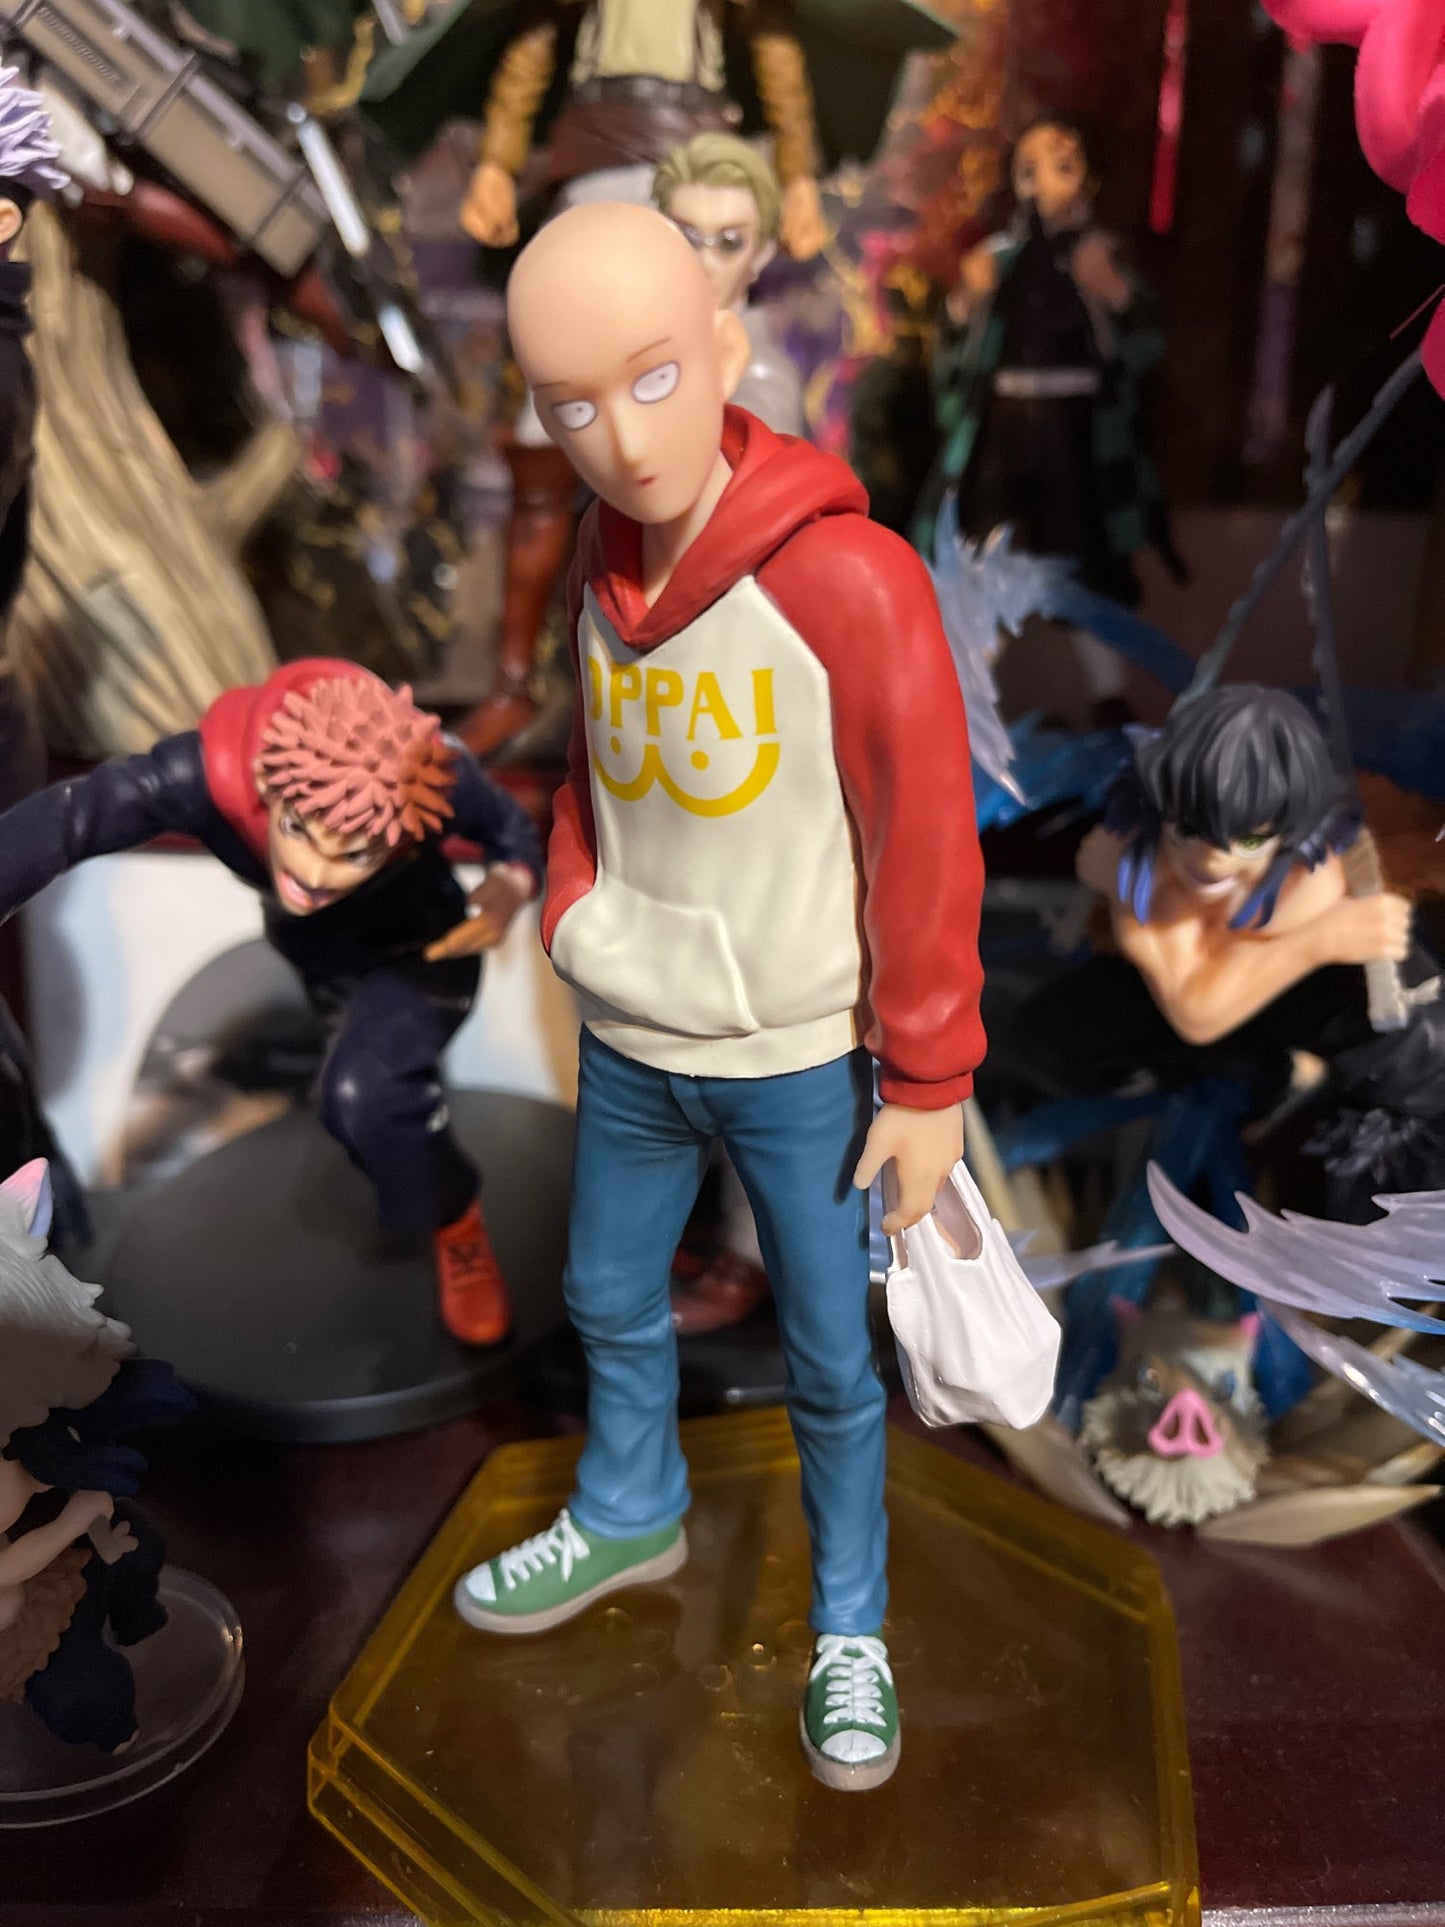 One punch man figurine saitama 18cm stauette decoration collection manga